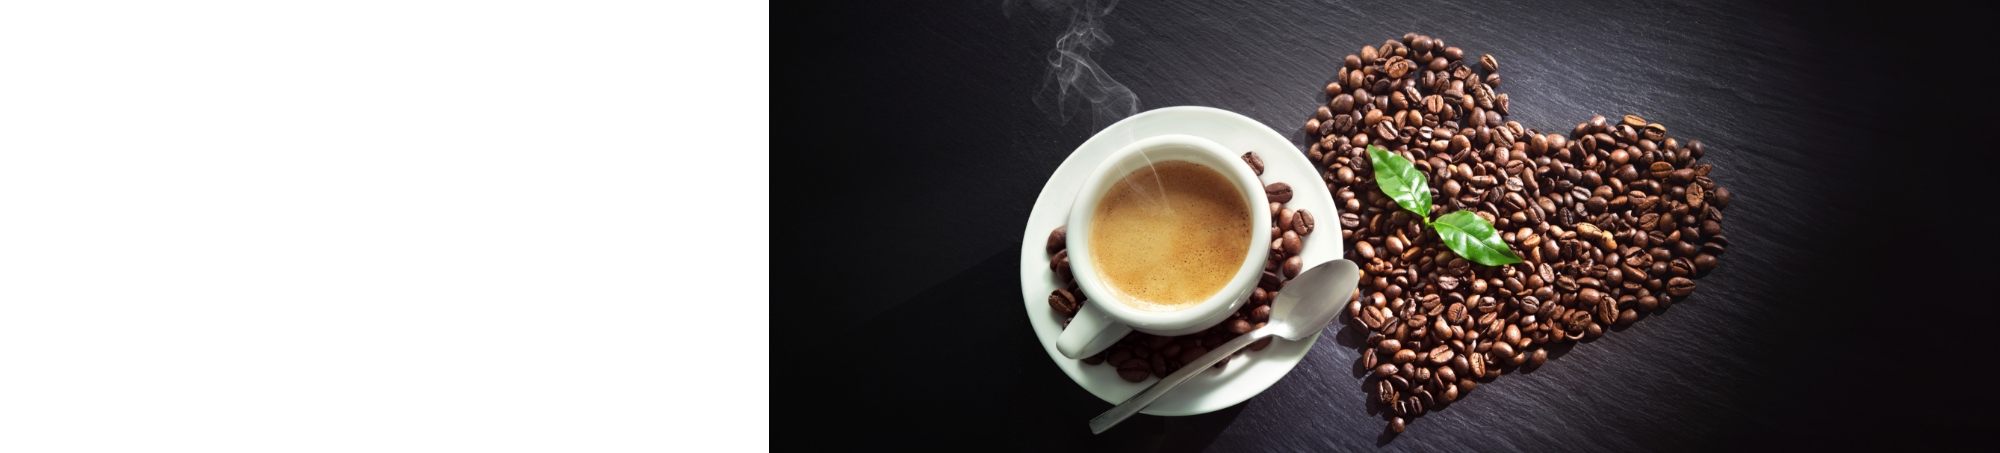 Macchina caffè Nespresso De'Longhi EN 85.R Essenza Mini - DIMOStore